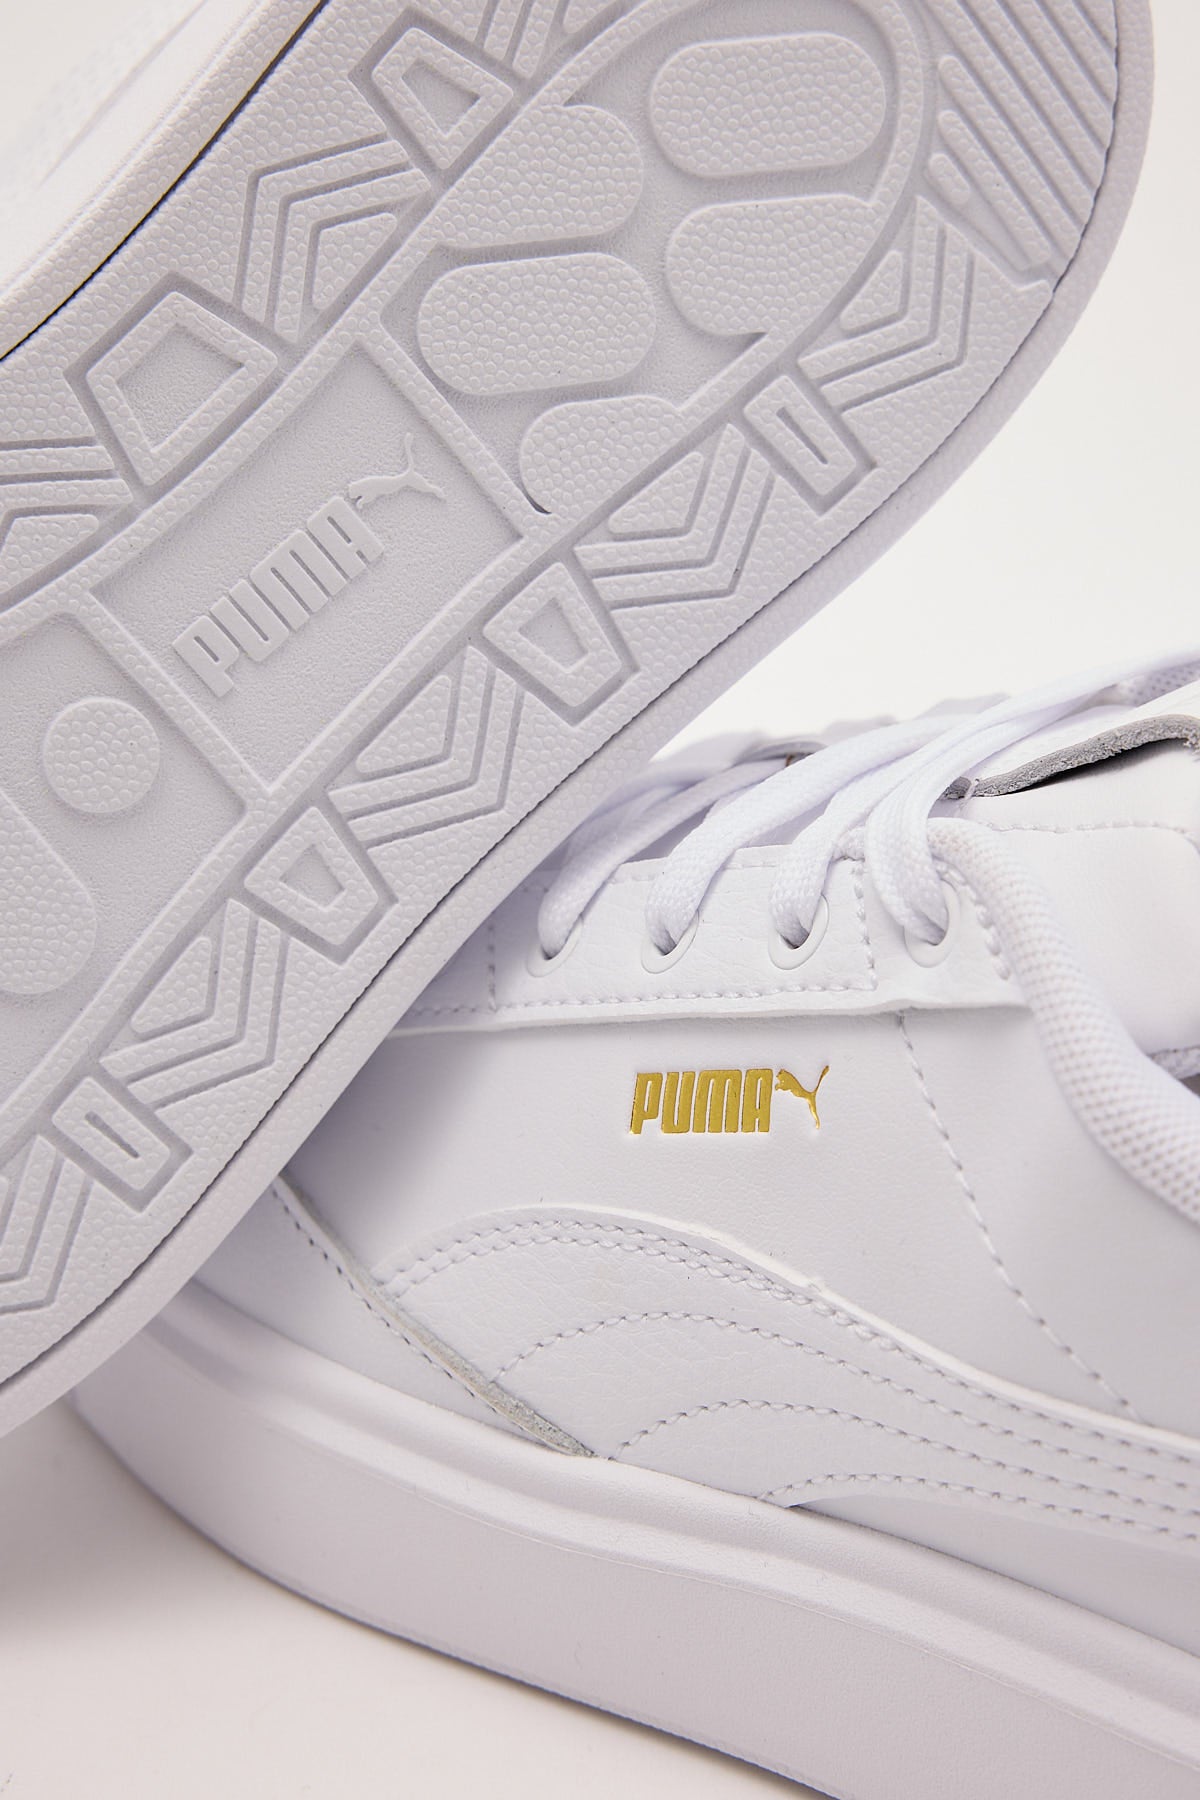 Puma Lajla Leather Sneaker Puma White